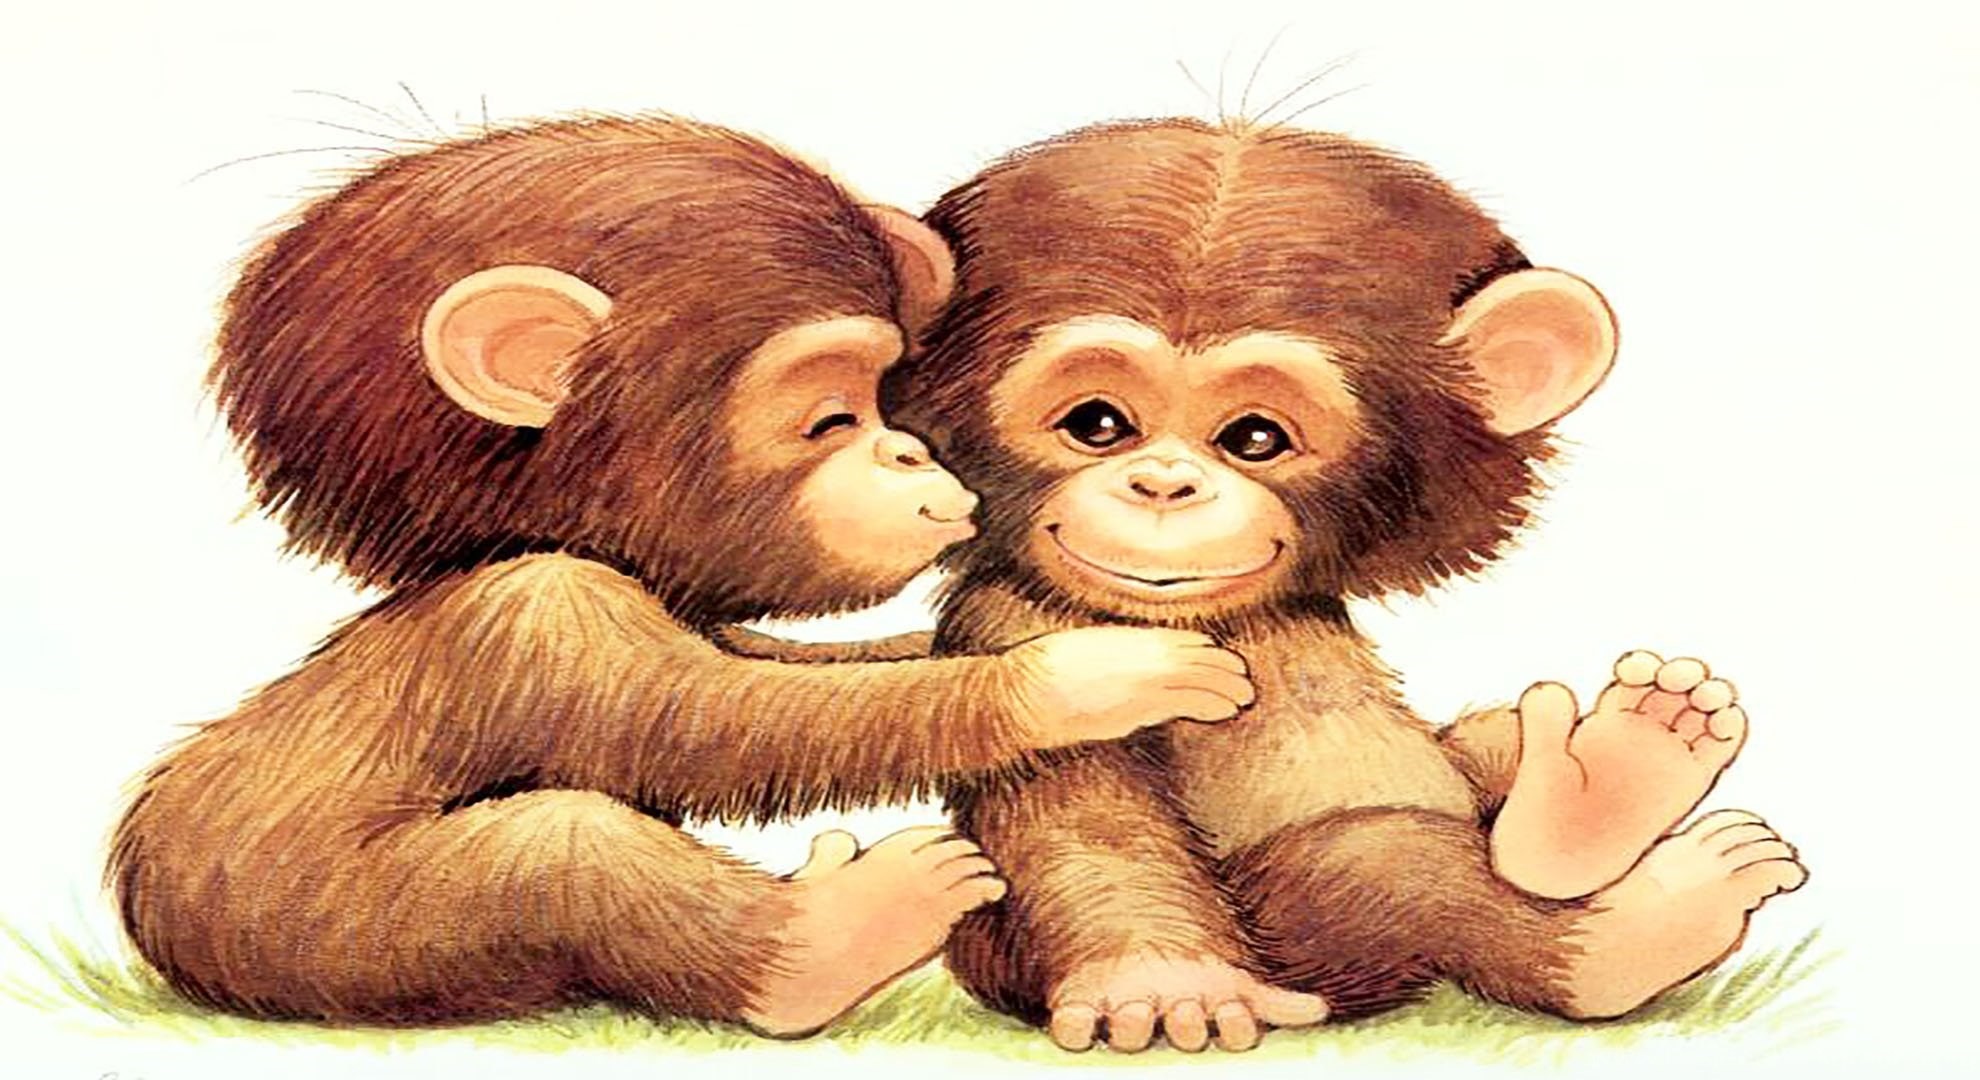 mono de dibujos animados,orangután,primate,chimpancé común,amistad,dibujos animados